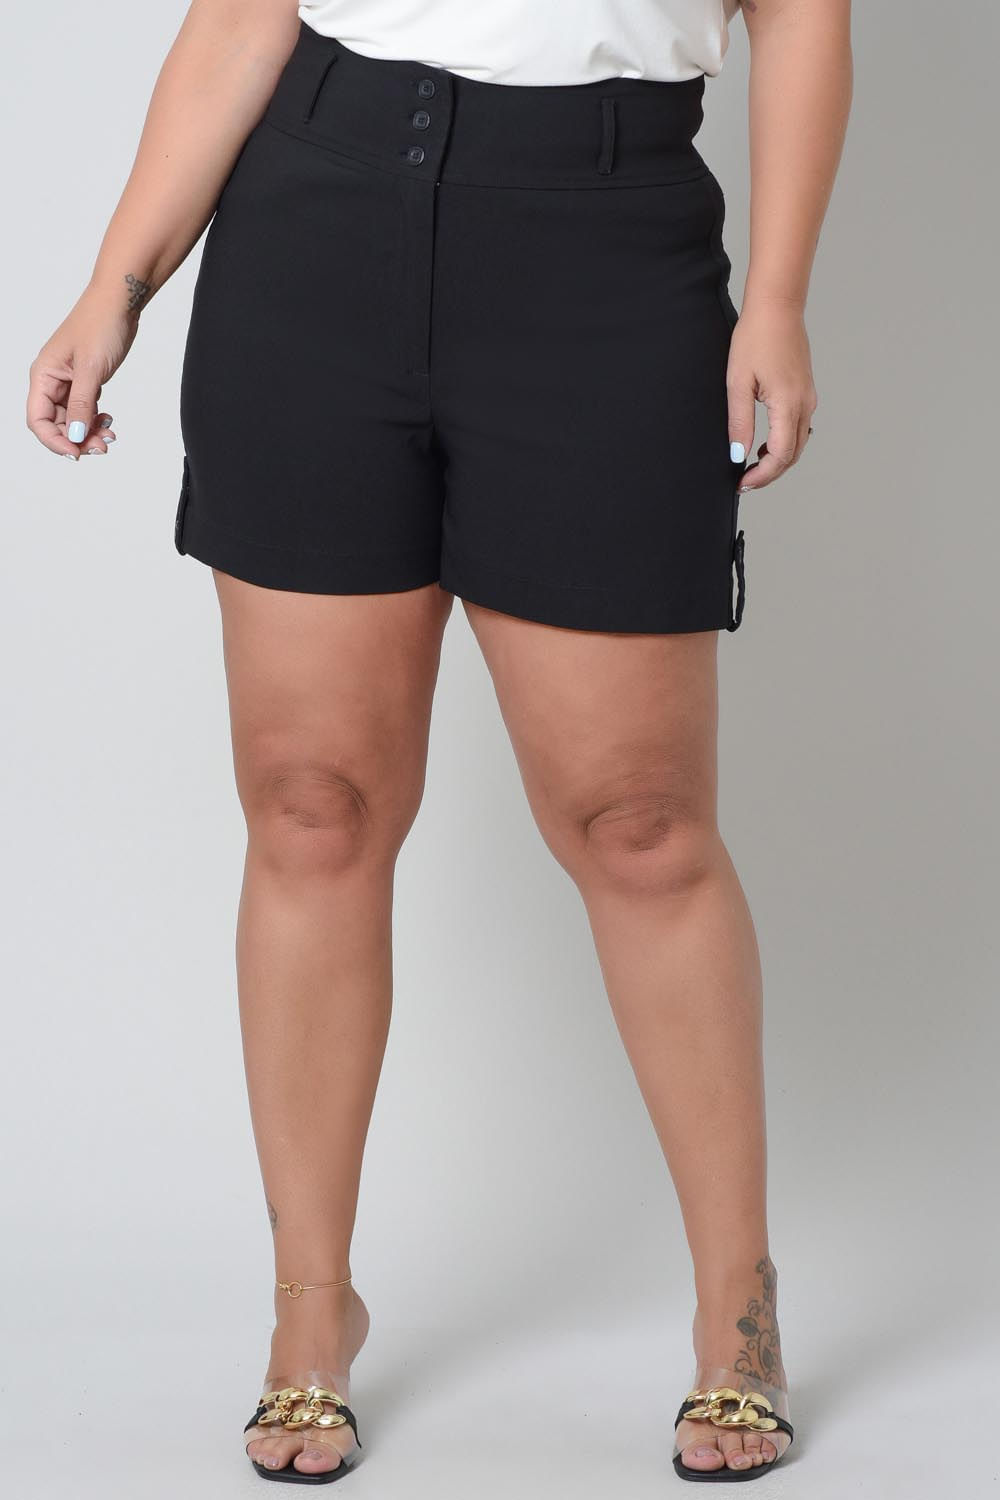 Shorts Plus Size Lima em Alfaiataria - Program Moda